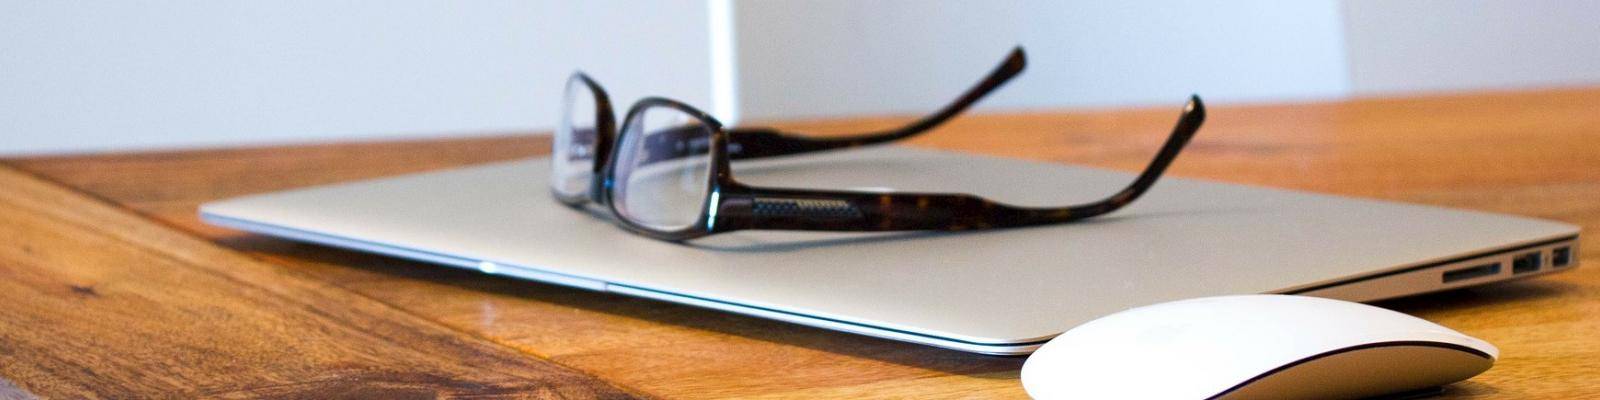 laptop muis en bril